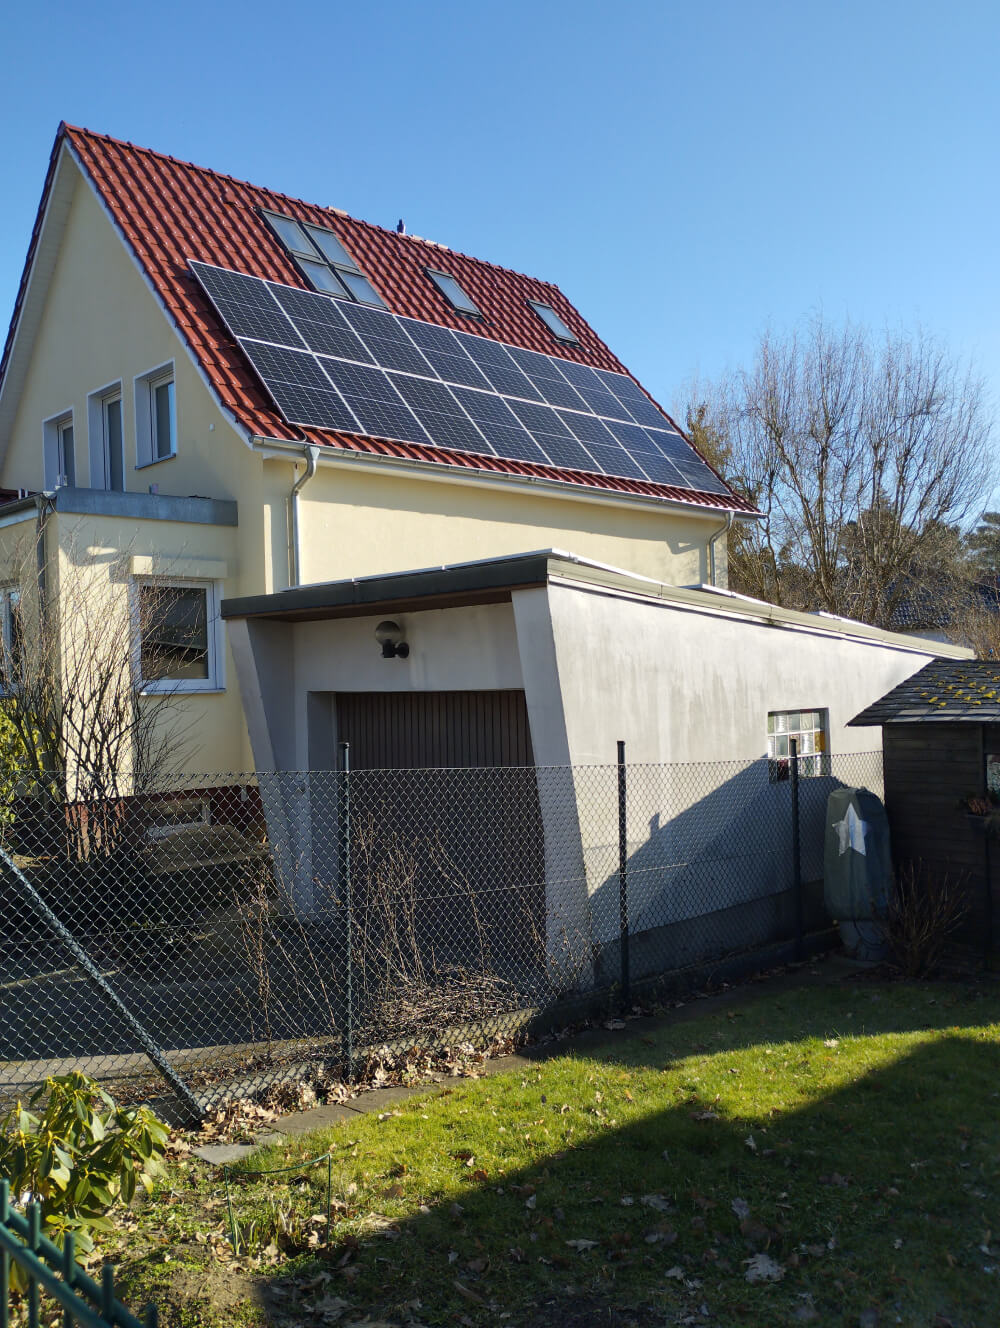 Solar Maintenance